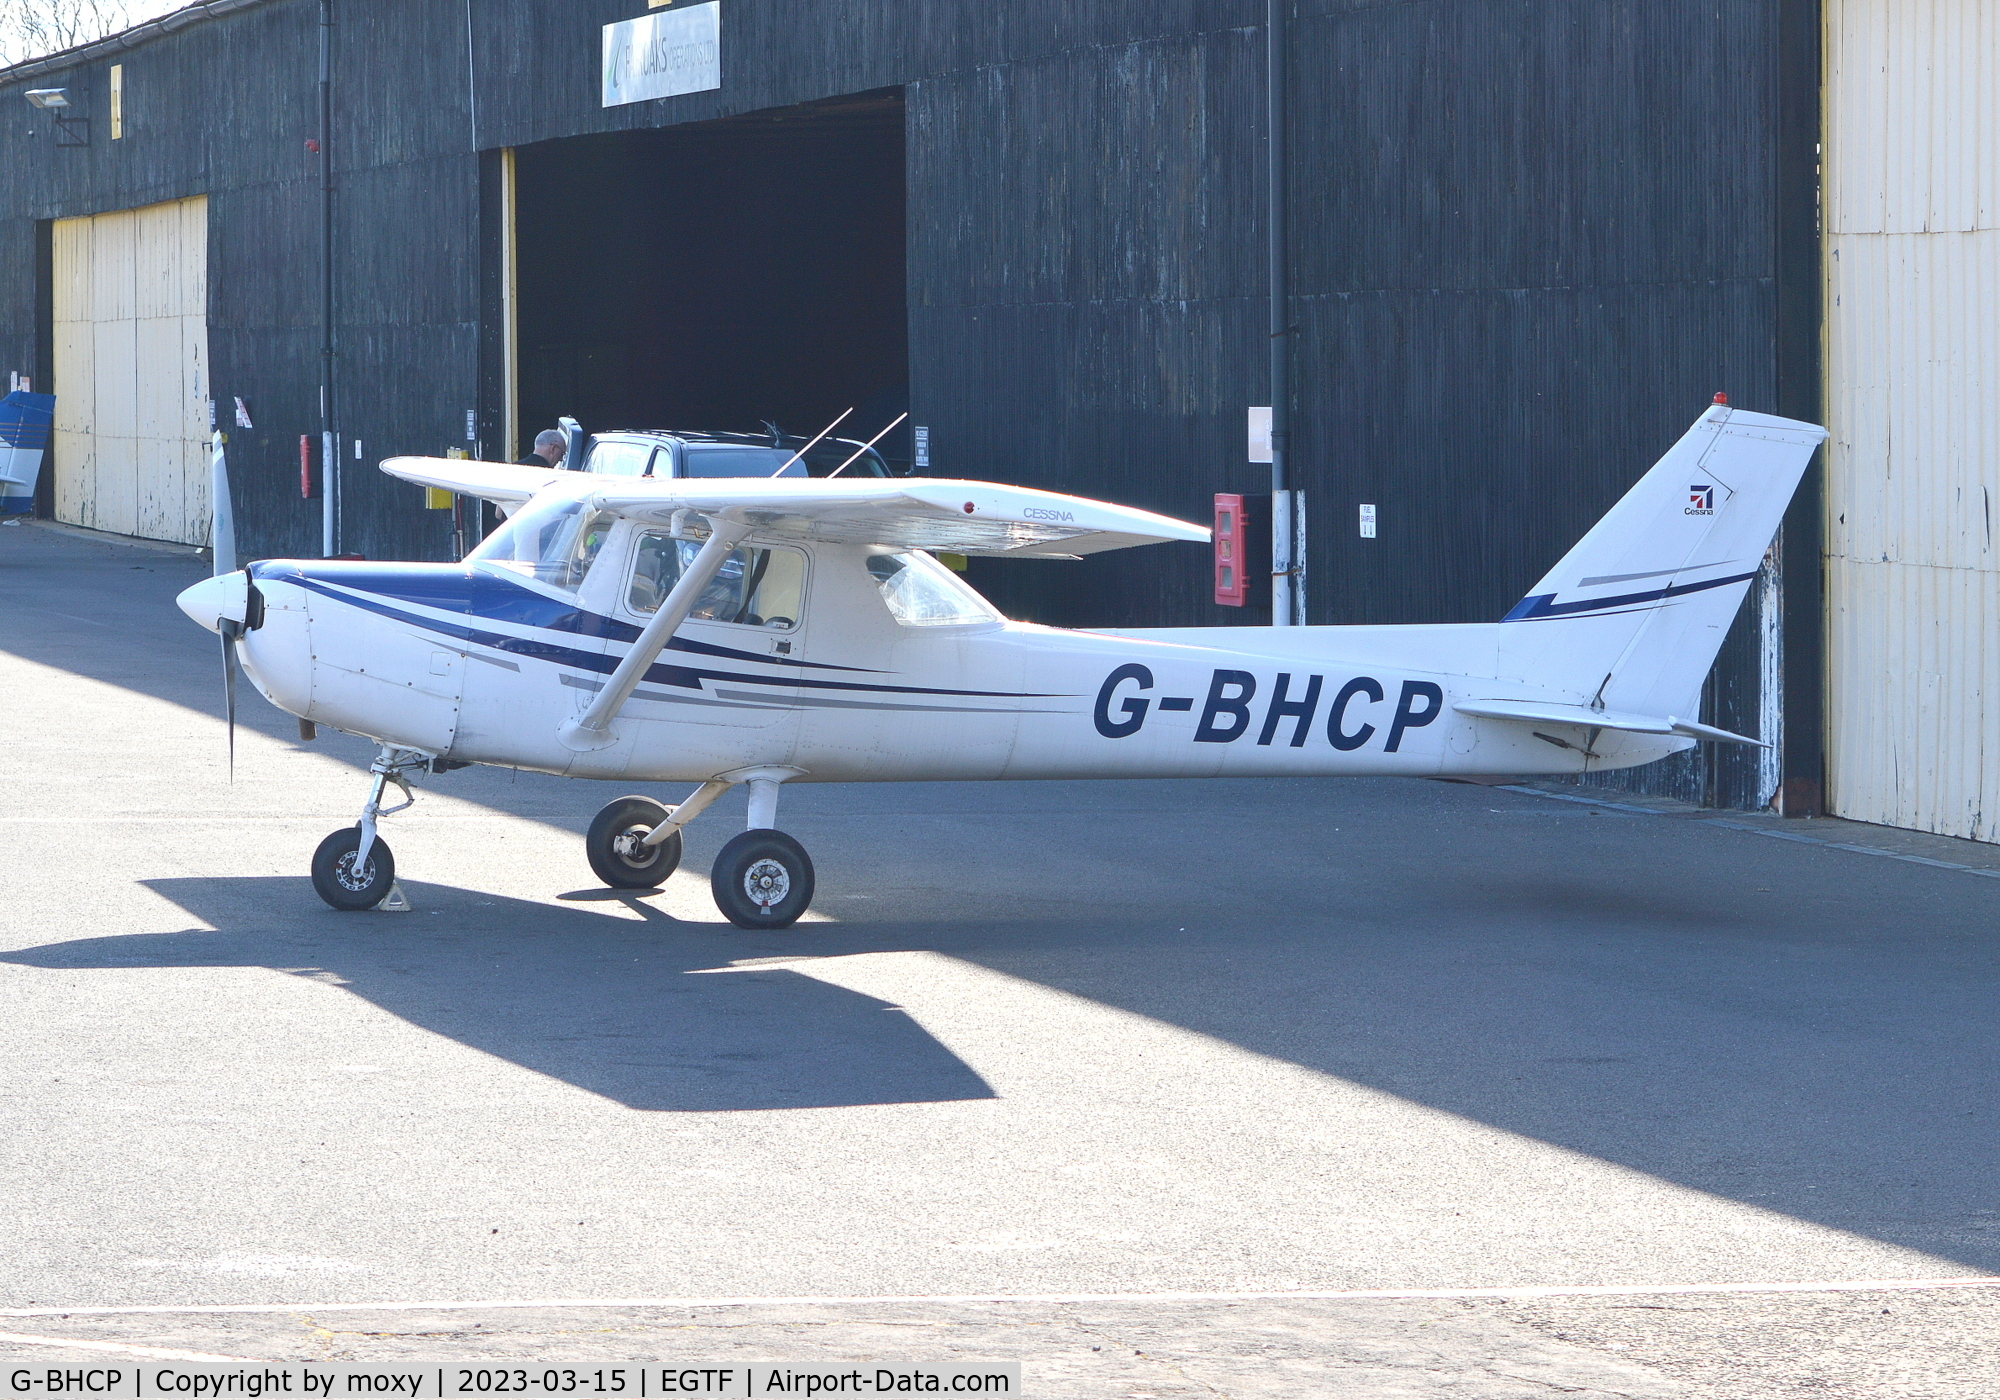 G-BHCP, 1979 Reims F152 C/N 1640, Reims Cessna F152 at Fairoaks.